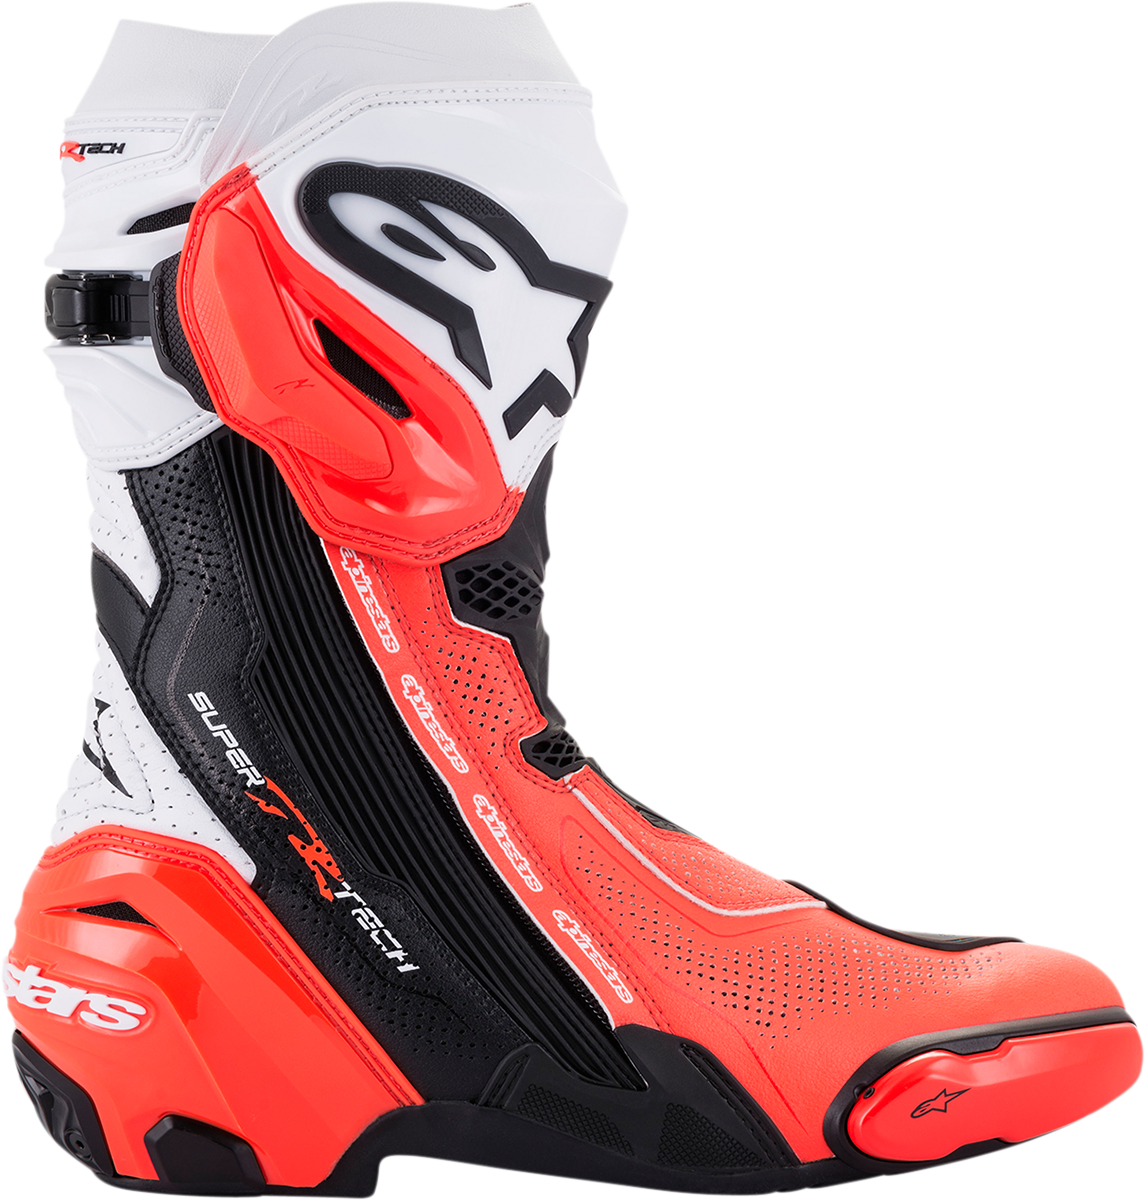 ALPINESTARS Supertech V Boots - Black/Fluo Red/White - US 8 / EU 42 2220121-124-42